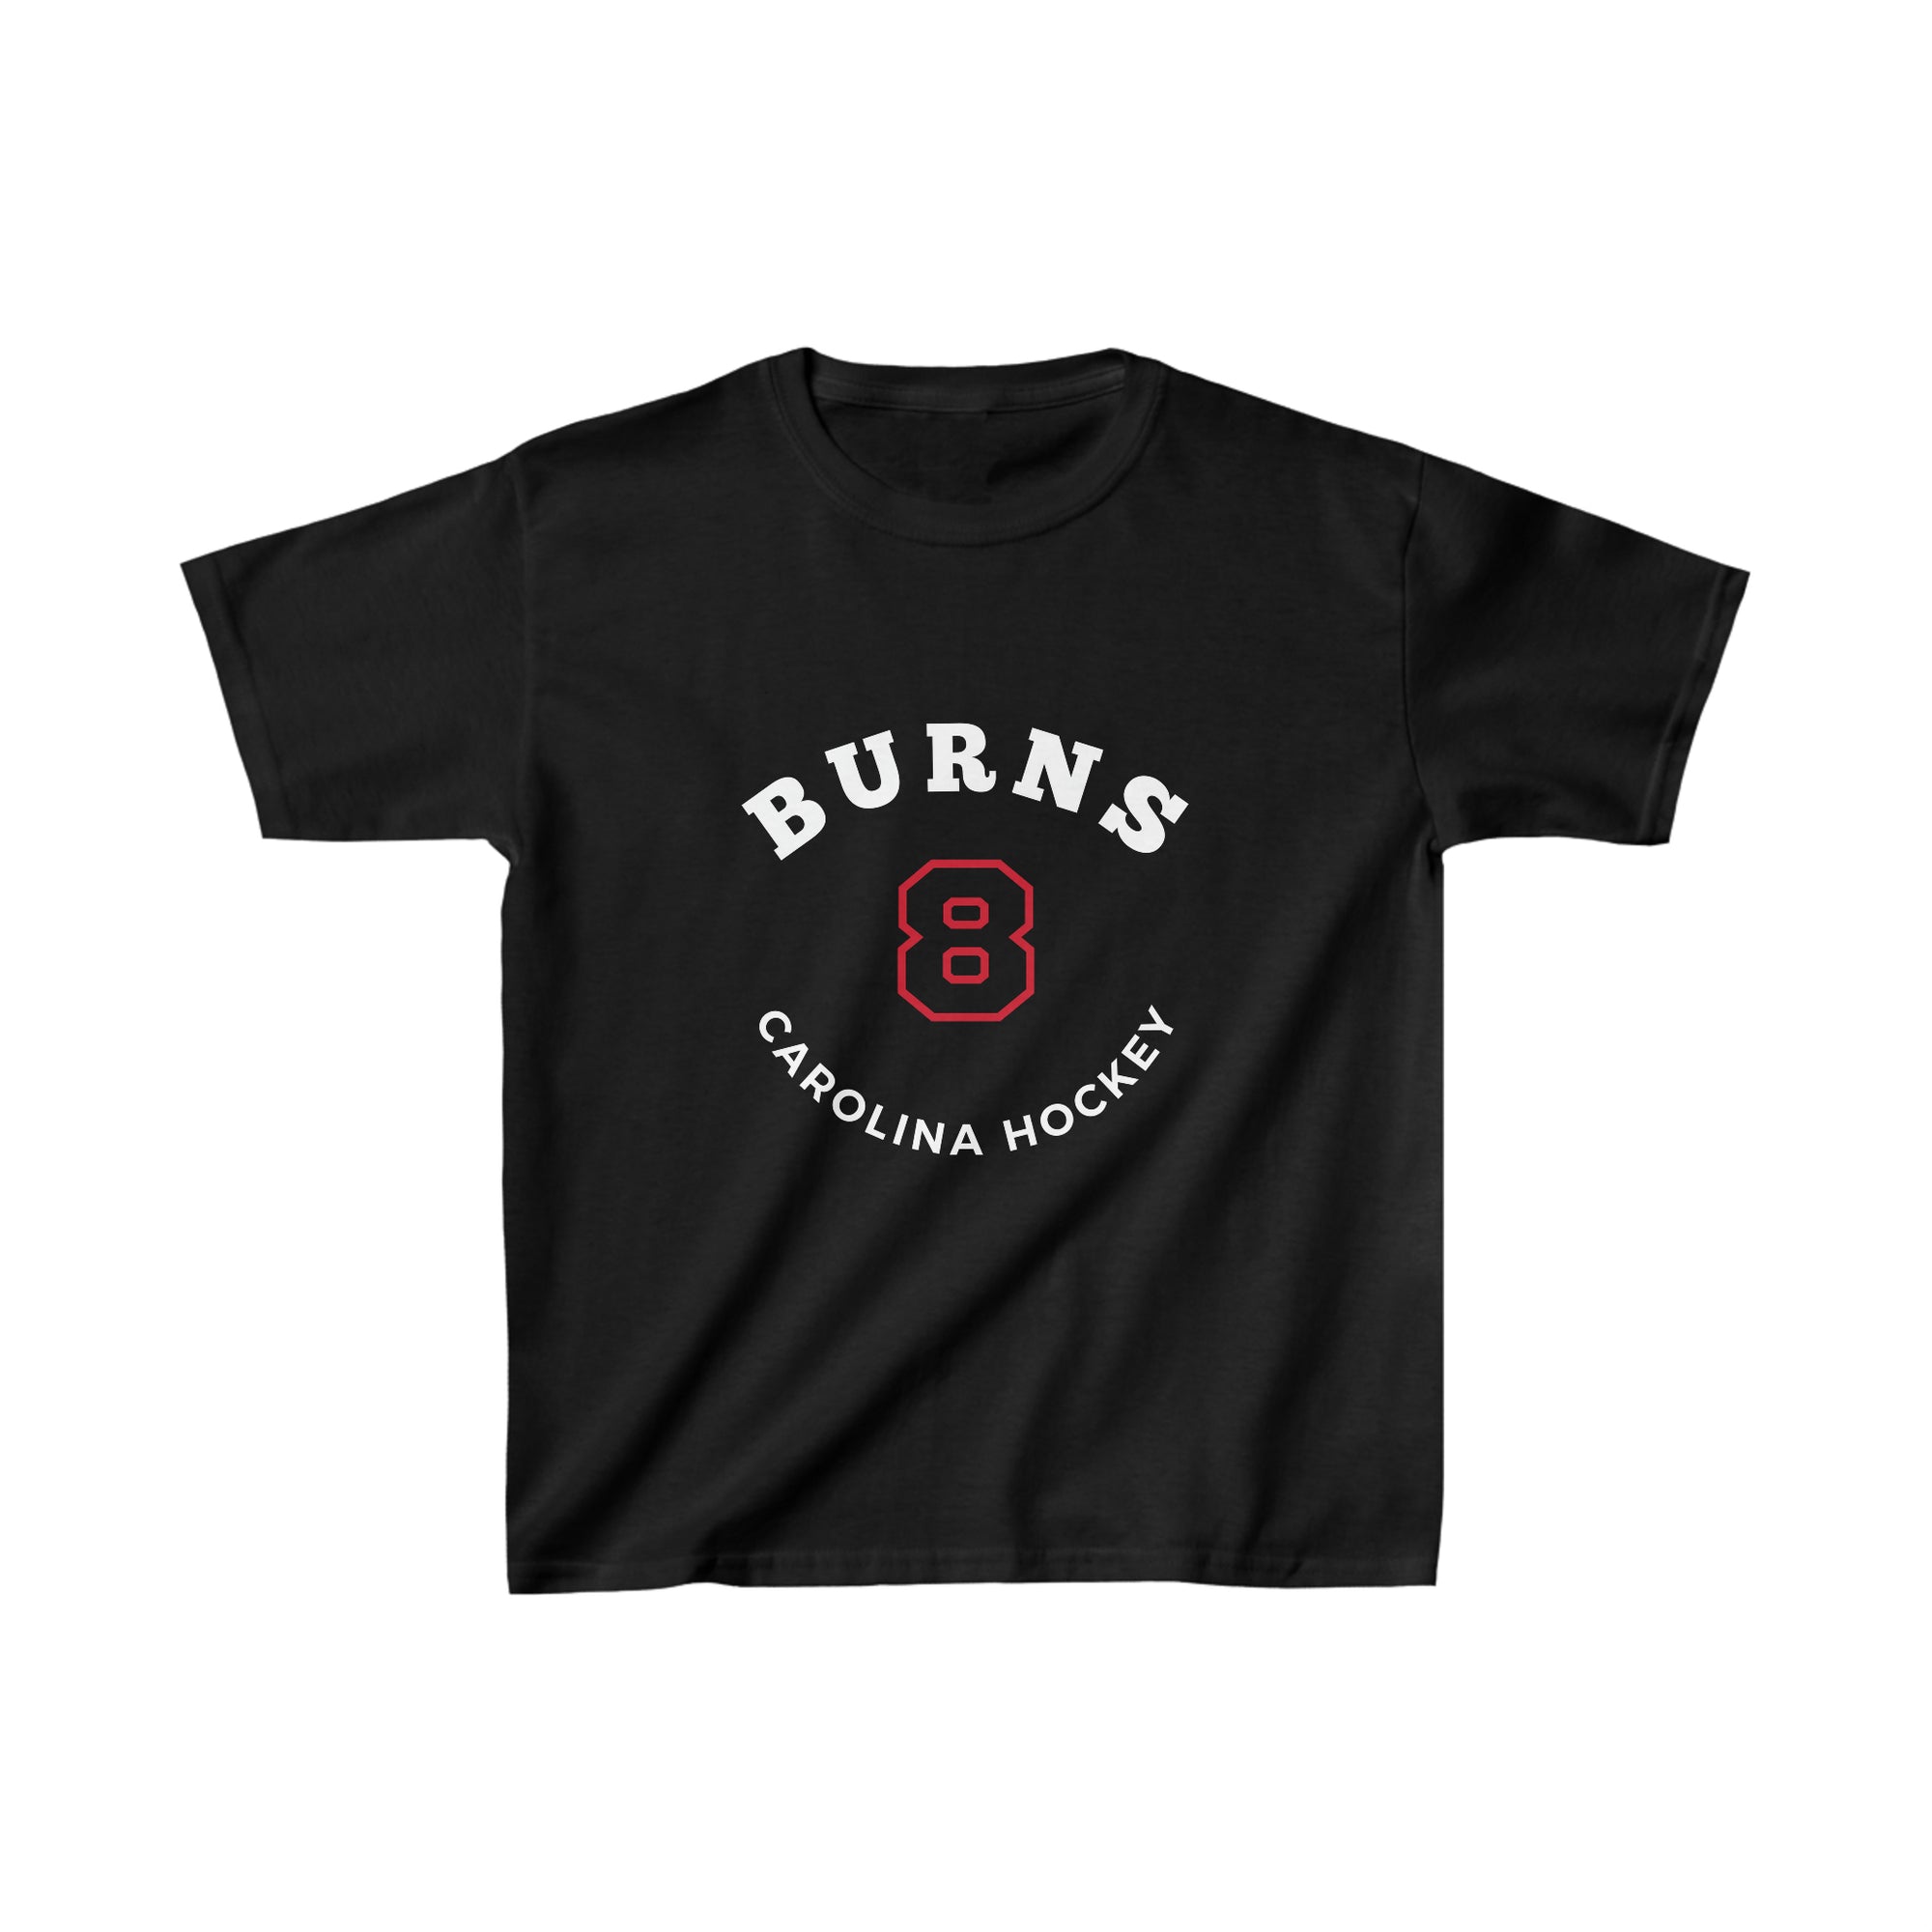 Burns 8 Carolina Hockey Number Arch Design Kids Tee